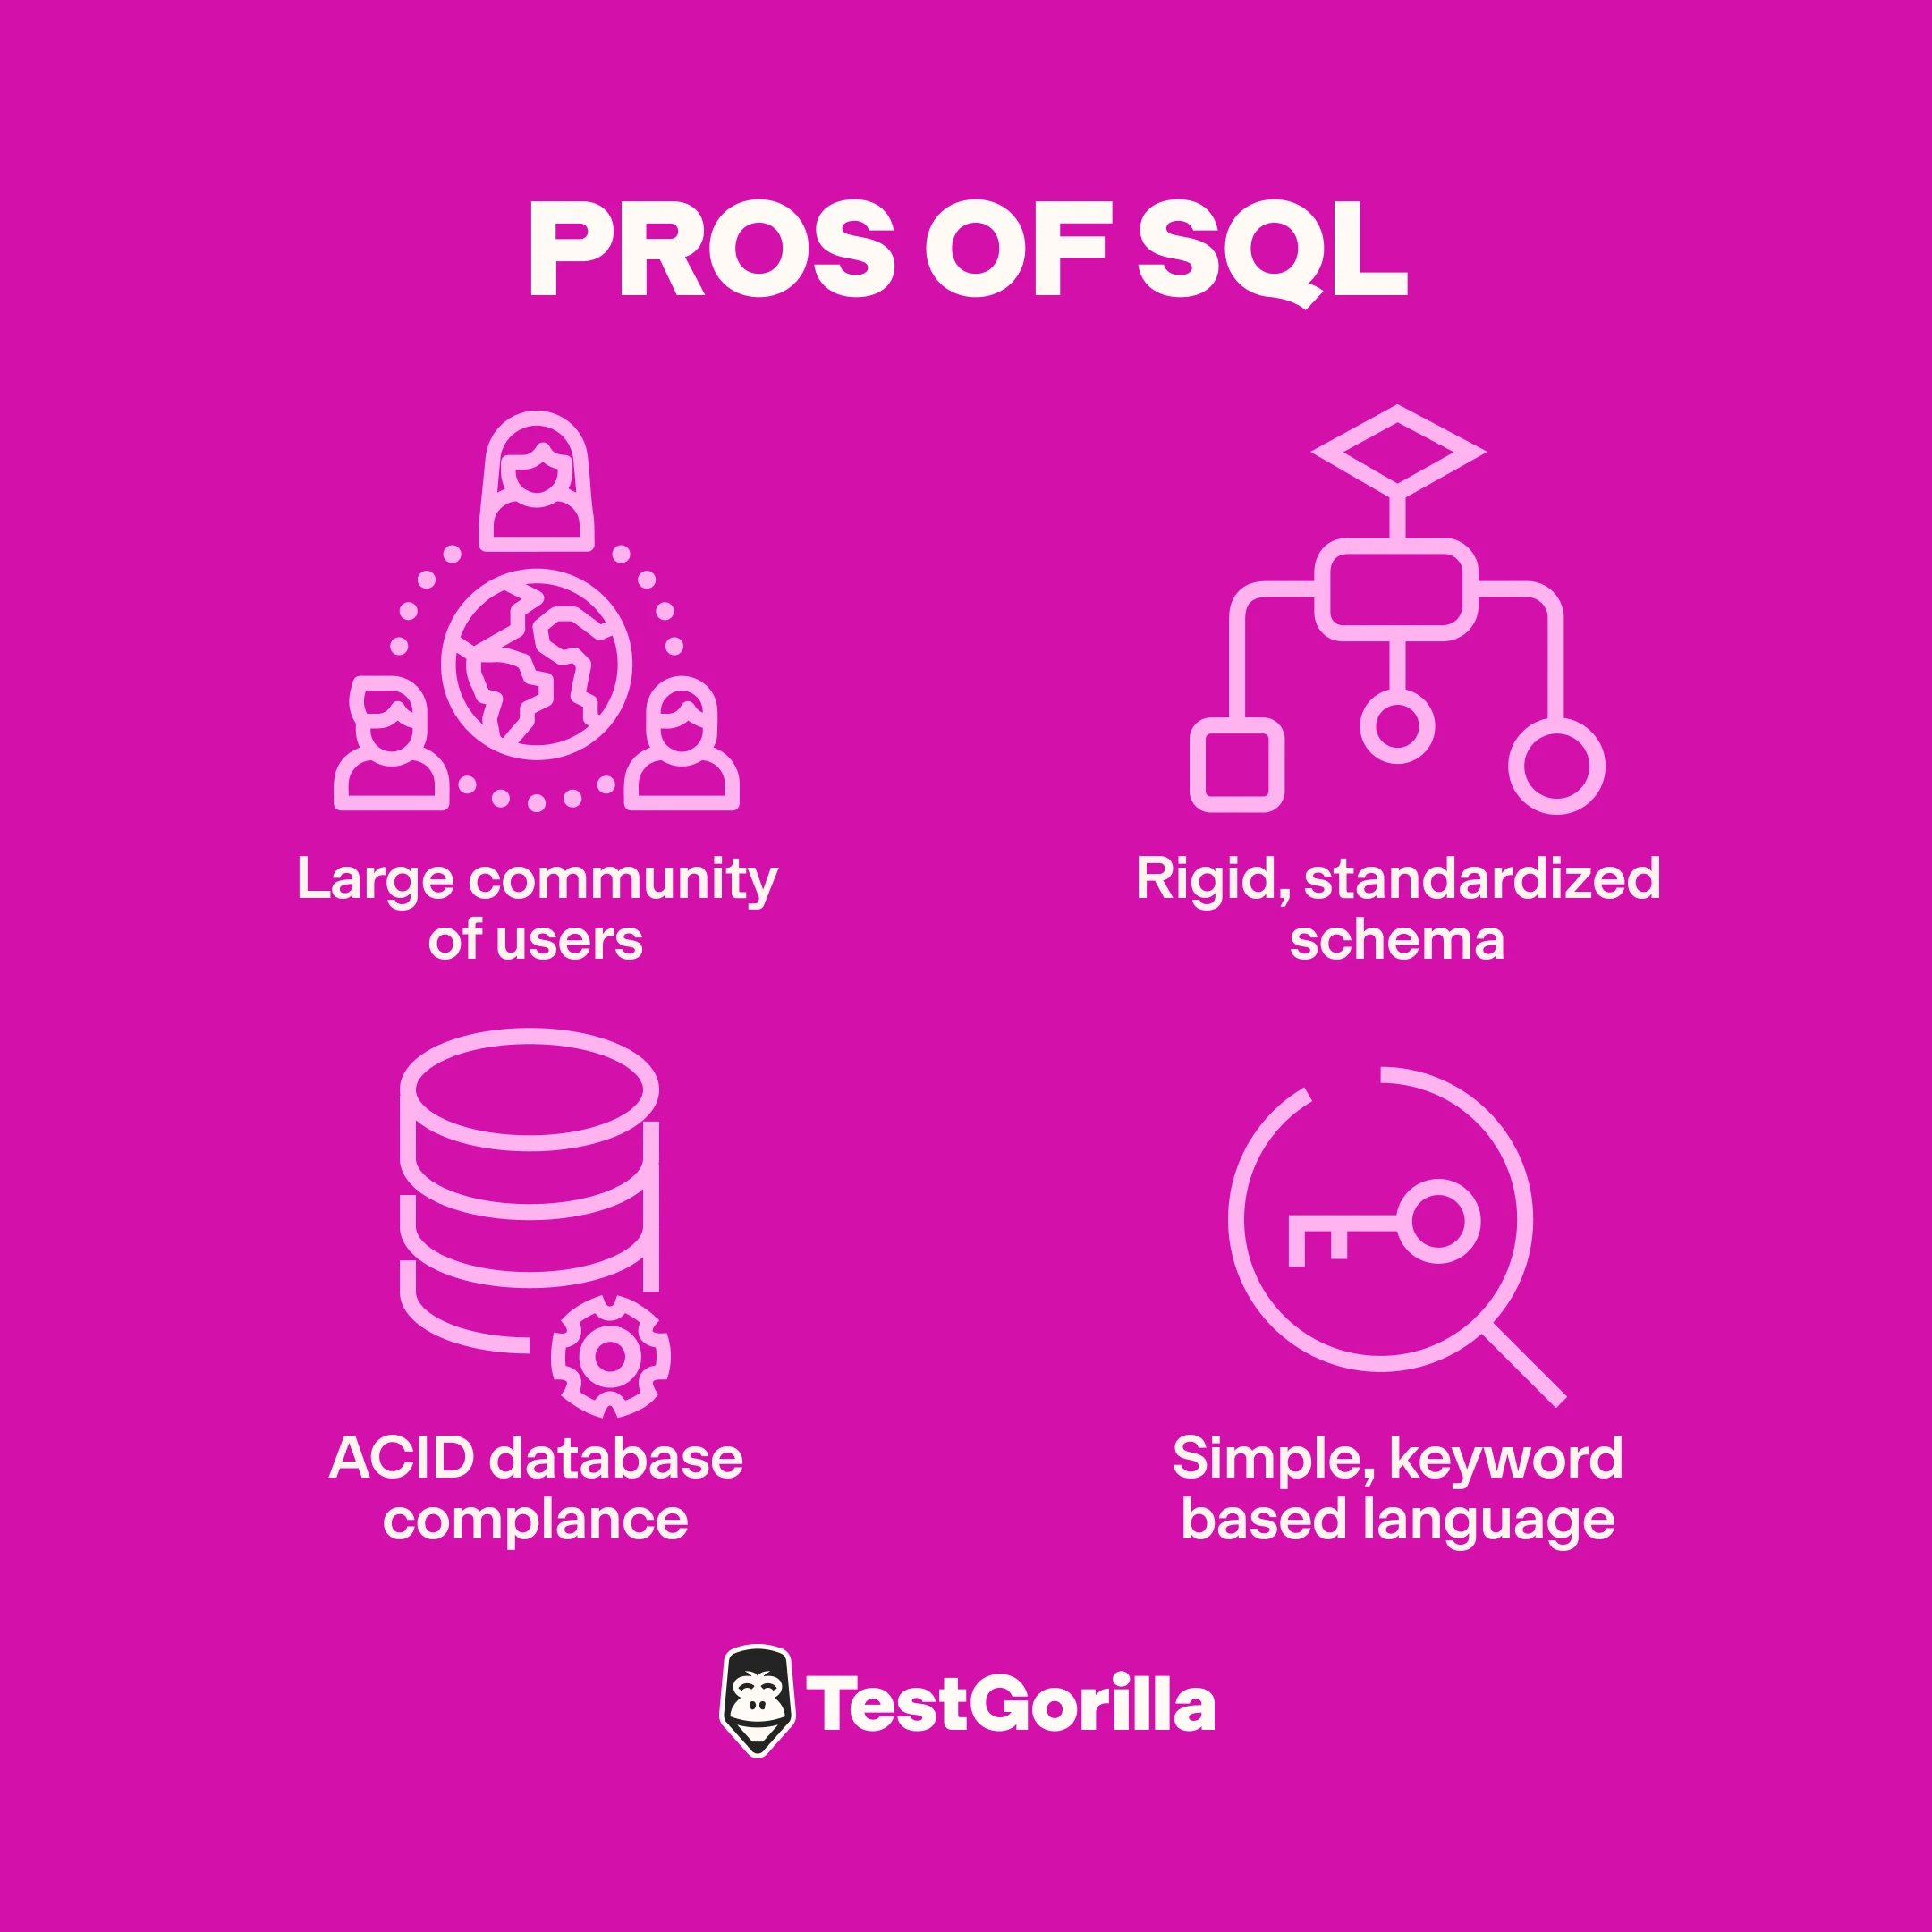 SQL pros